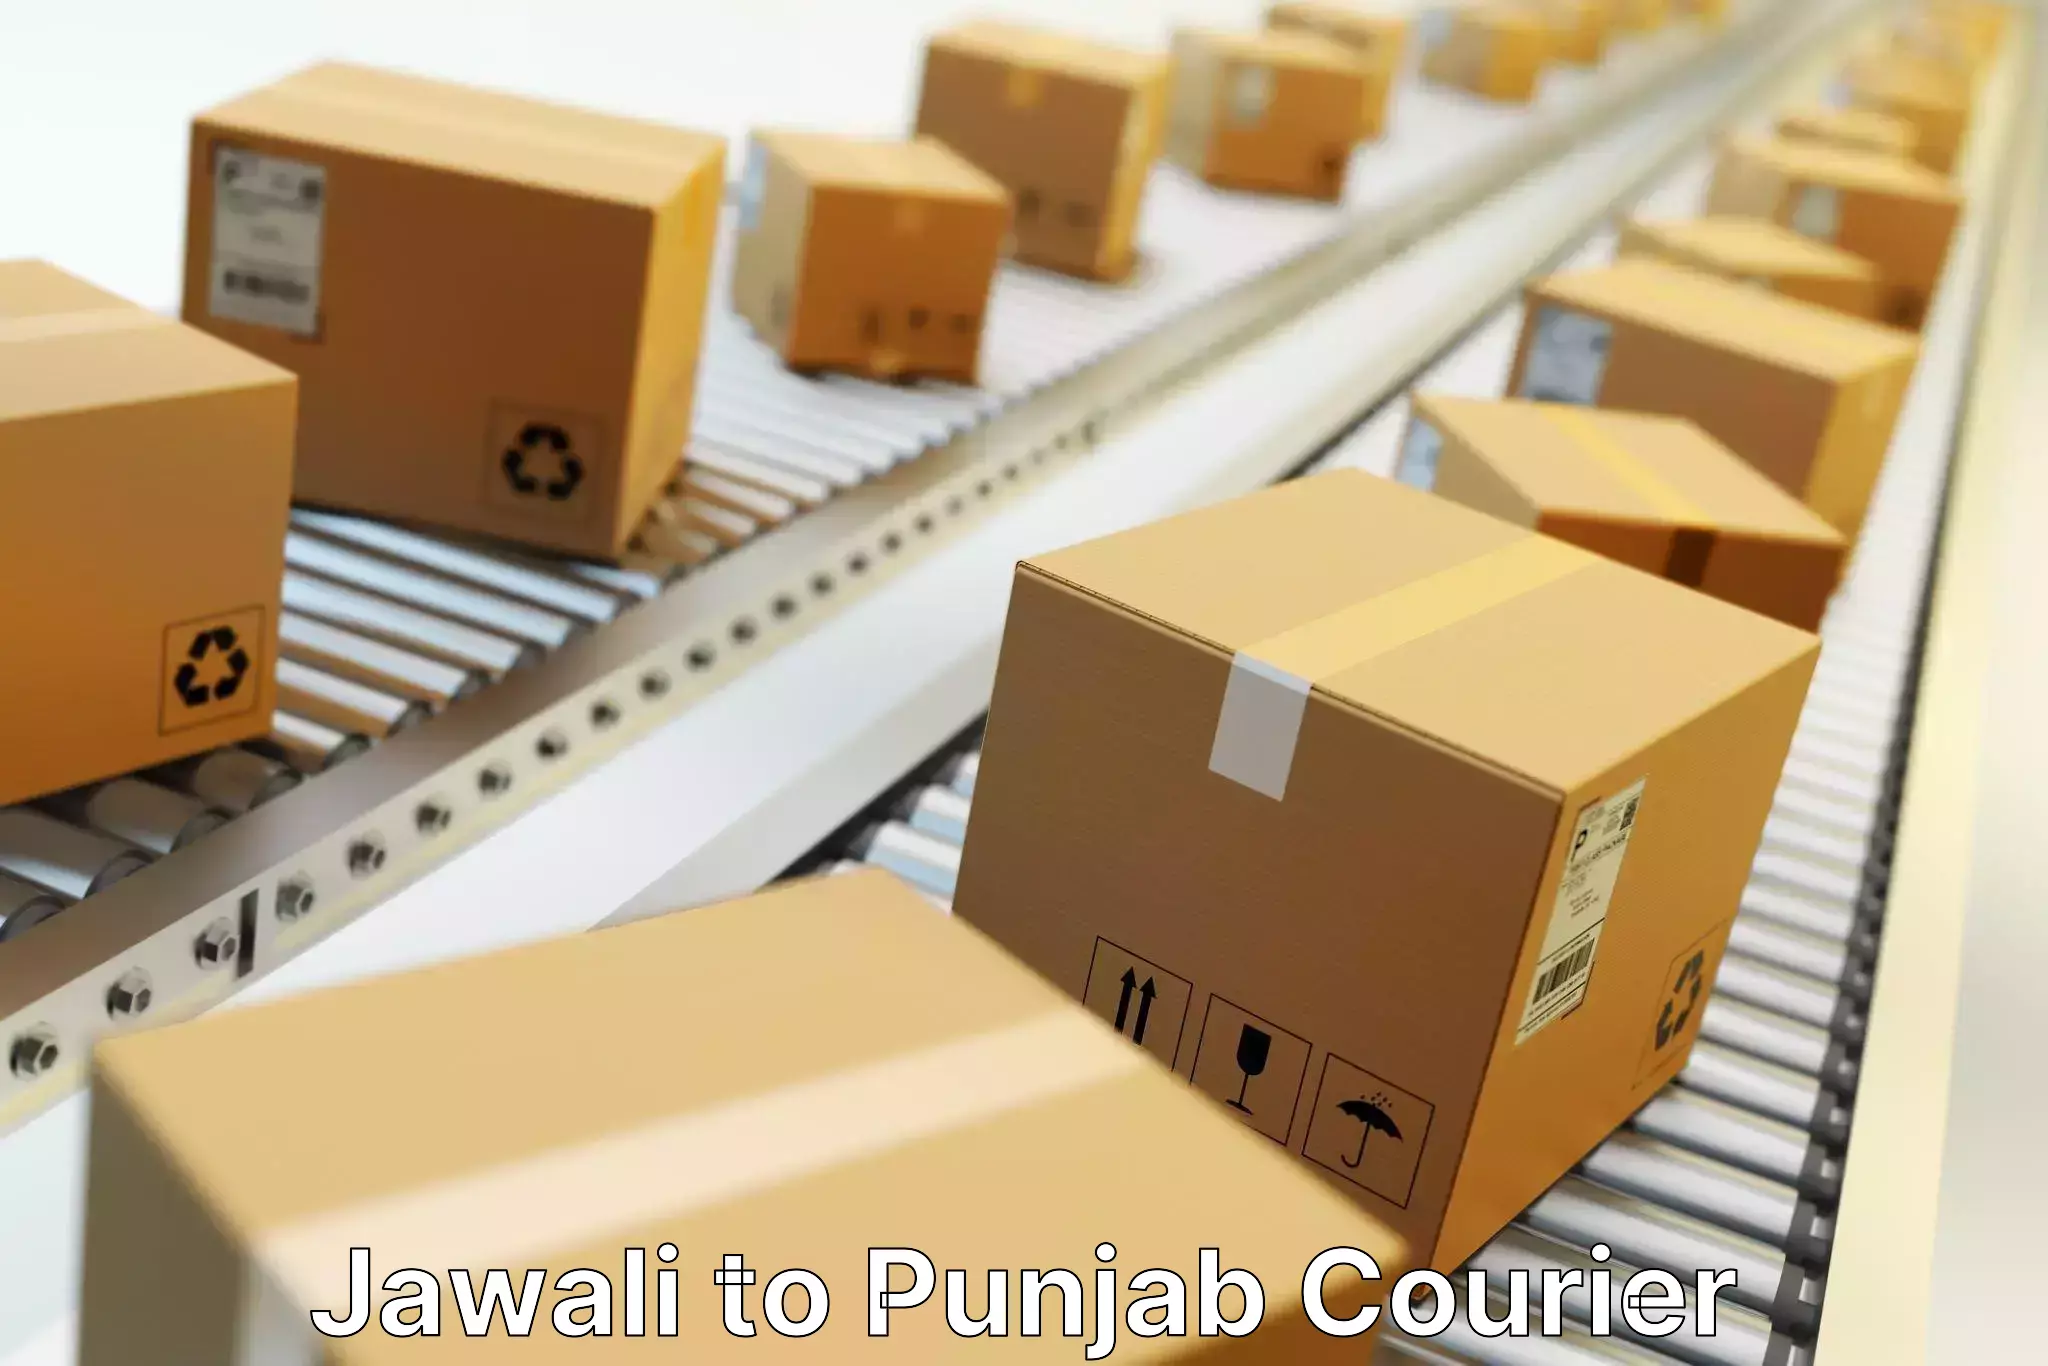 Bulk courier orders Jawali to Bathinda